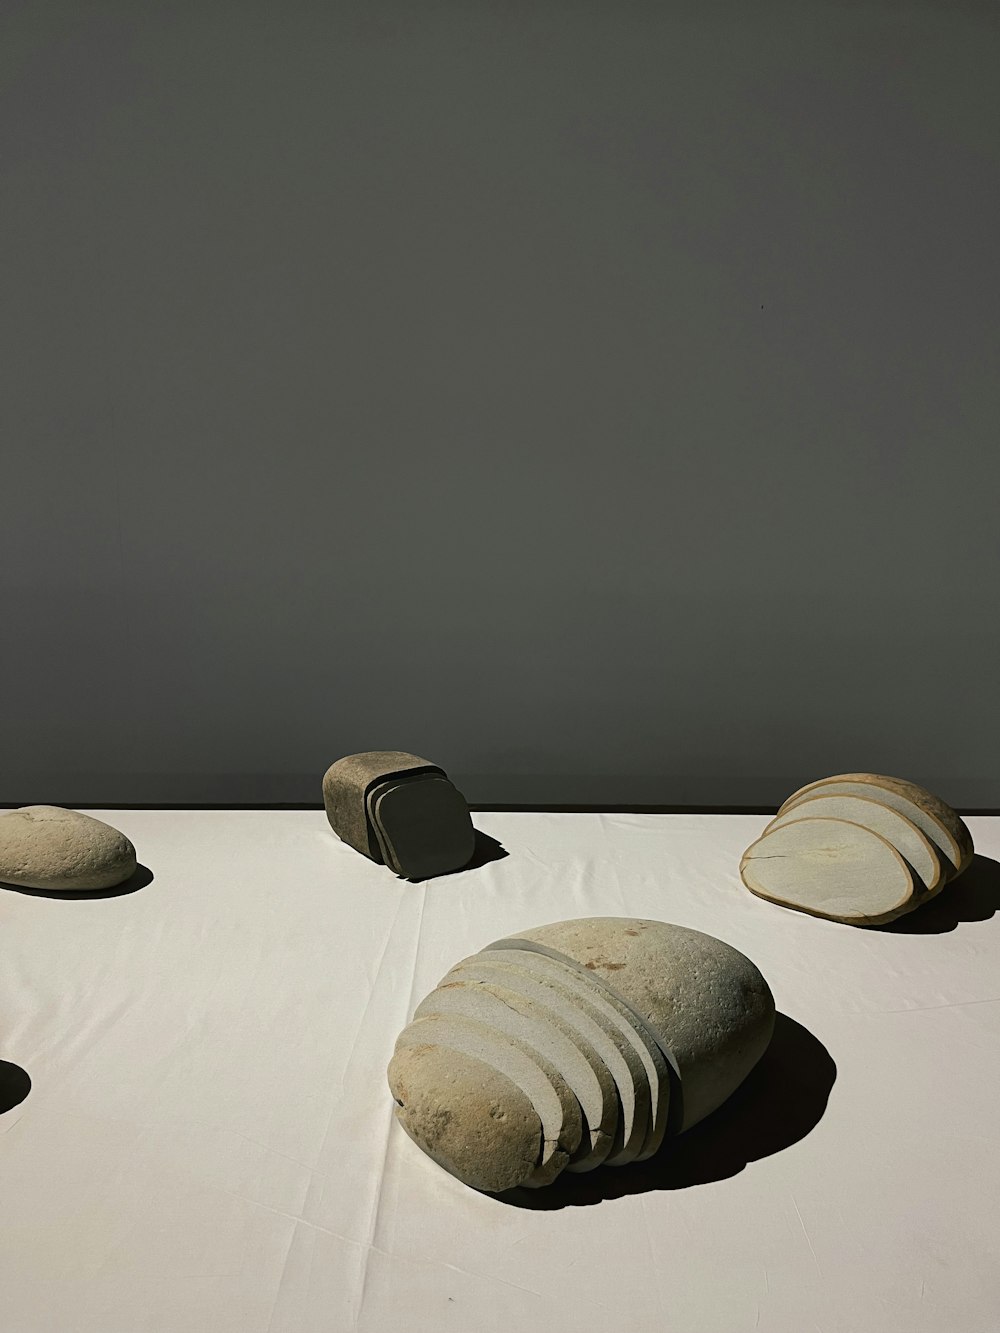 un grupo de rocas sentadas sobre una sábana blanca